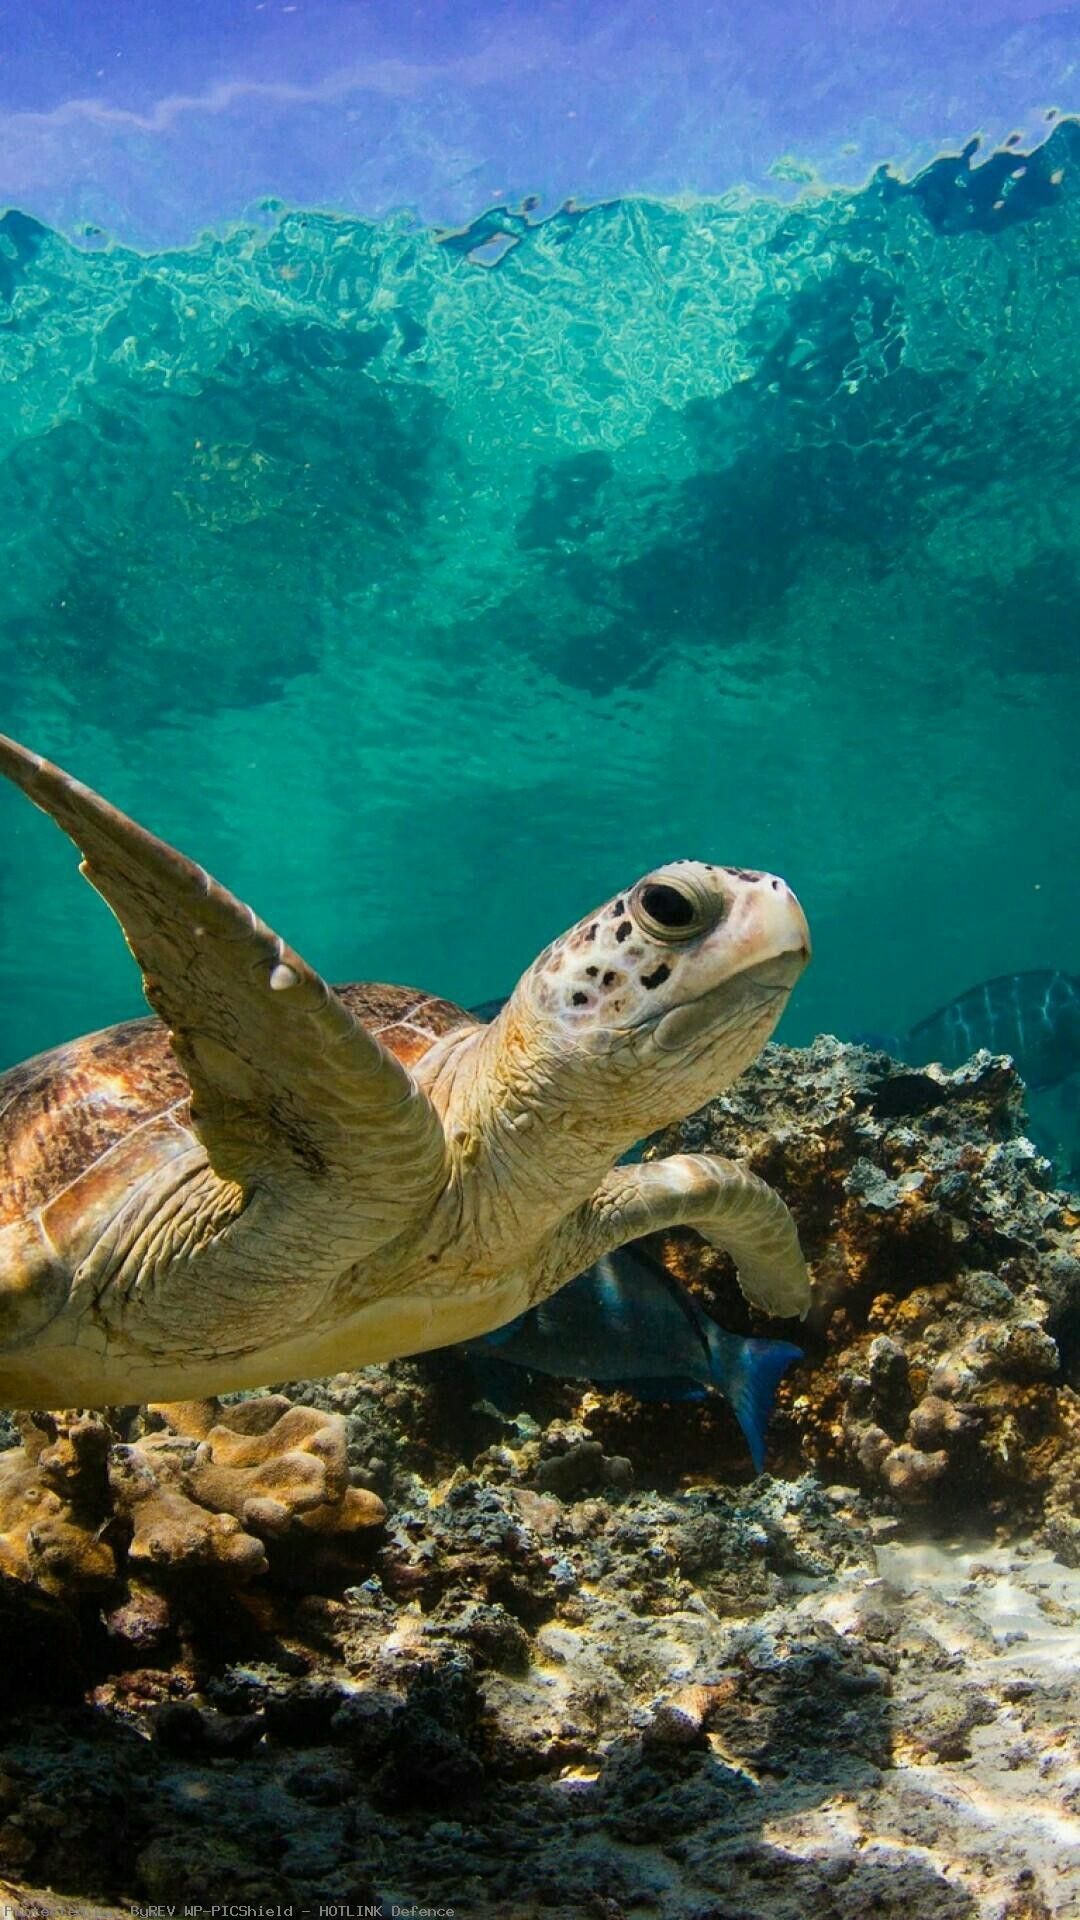 A turtle swimming in the ocean - Sea turtle, underwater, turtle